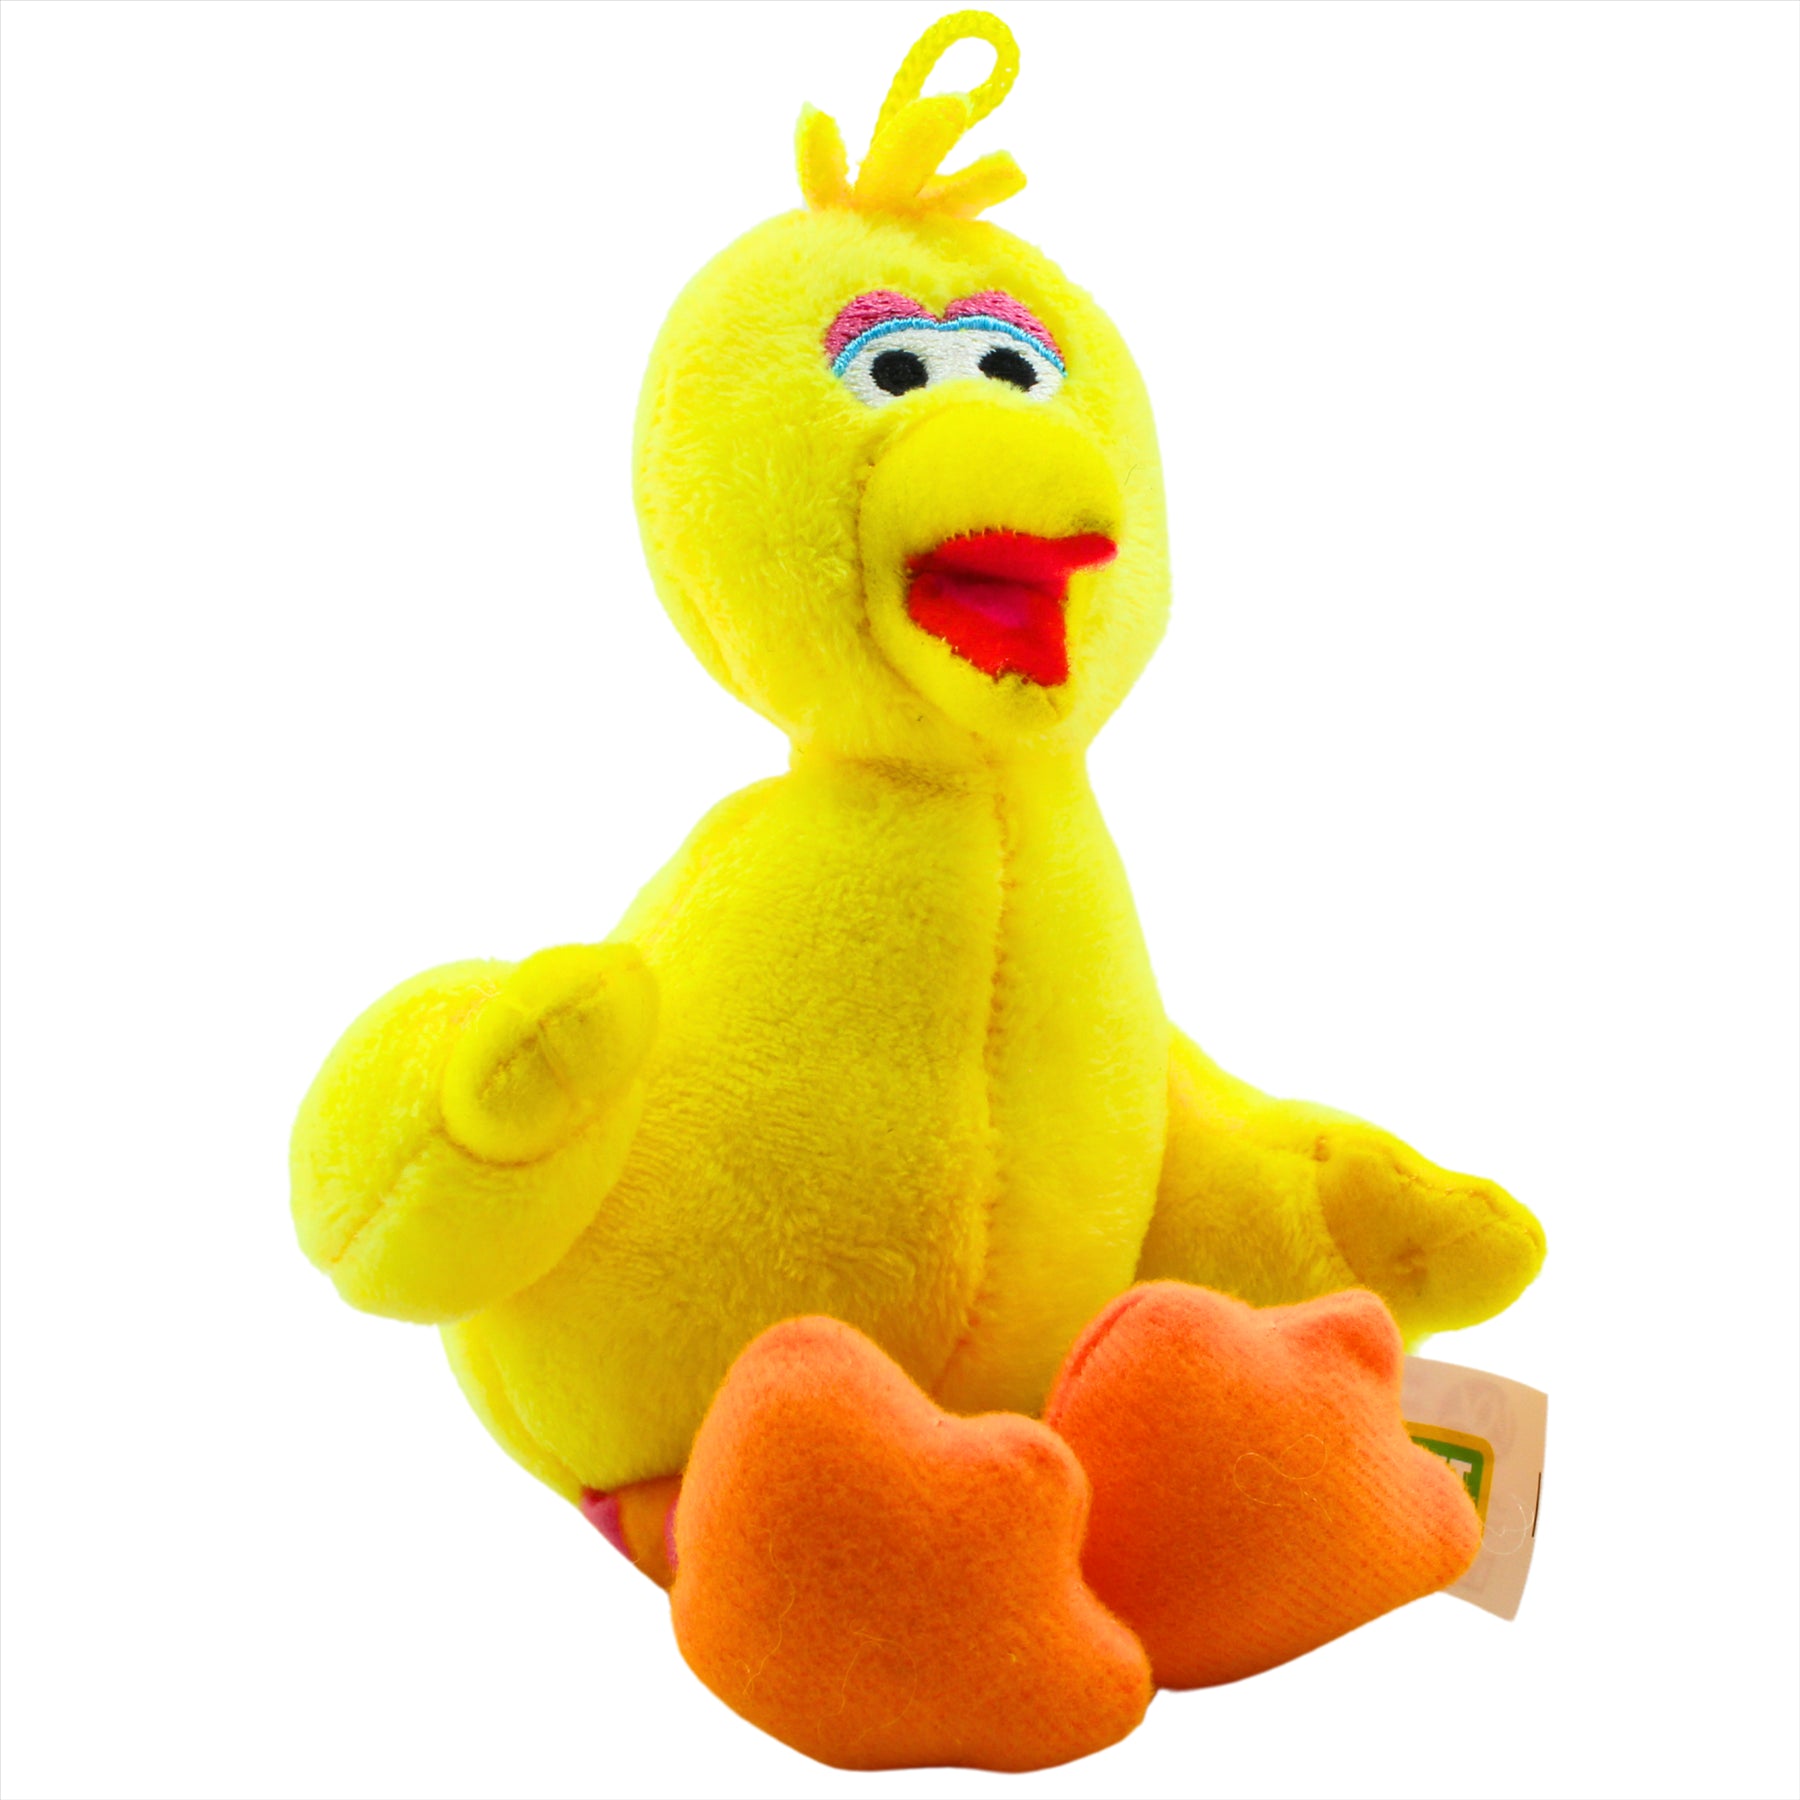 Sesame Street - Big Bird 7" and Grover 7" Super Soft Plush Toy - Twin Pack - Toptoys2u